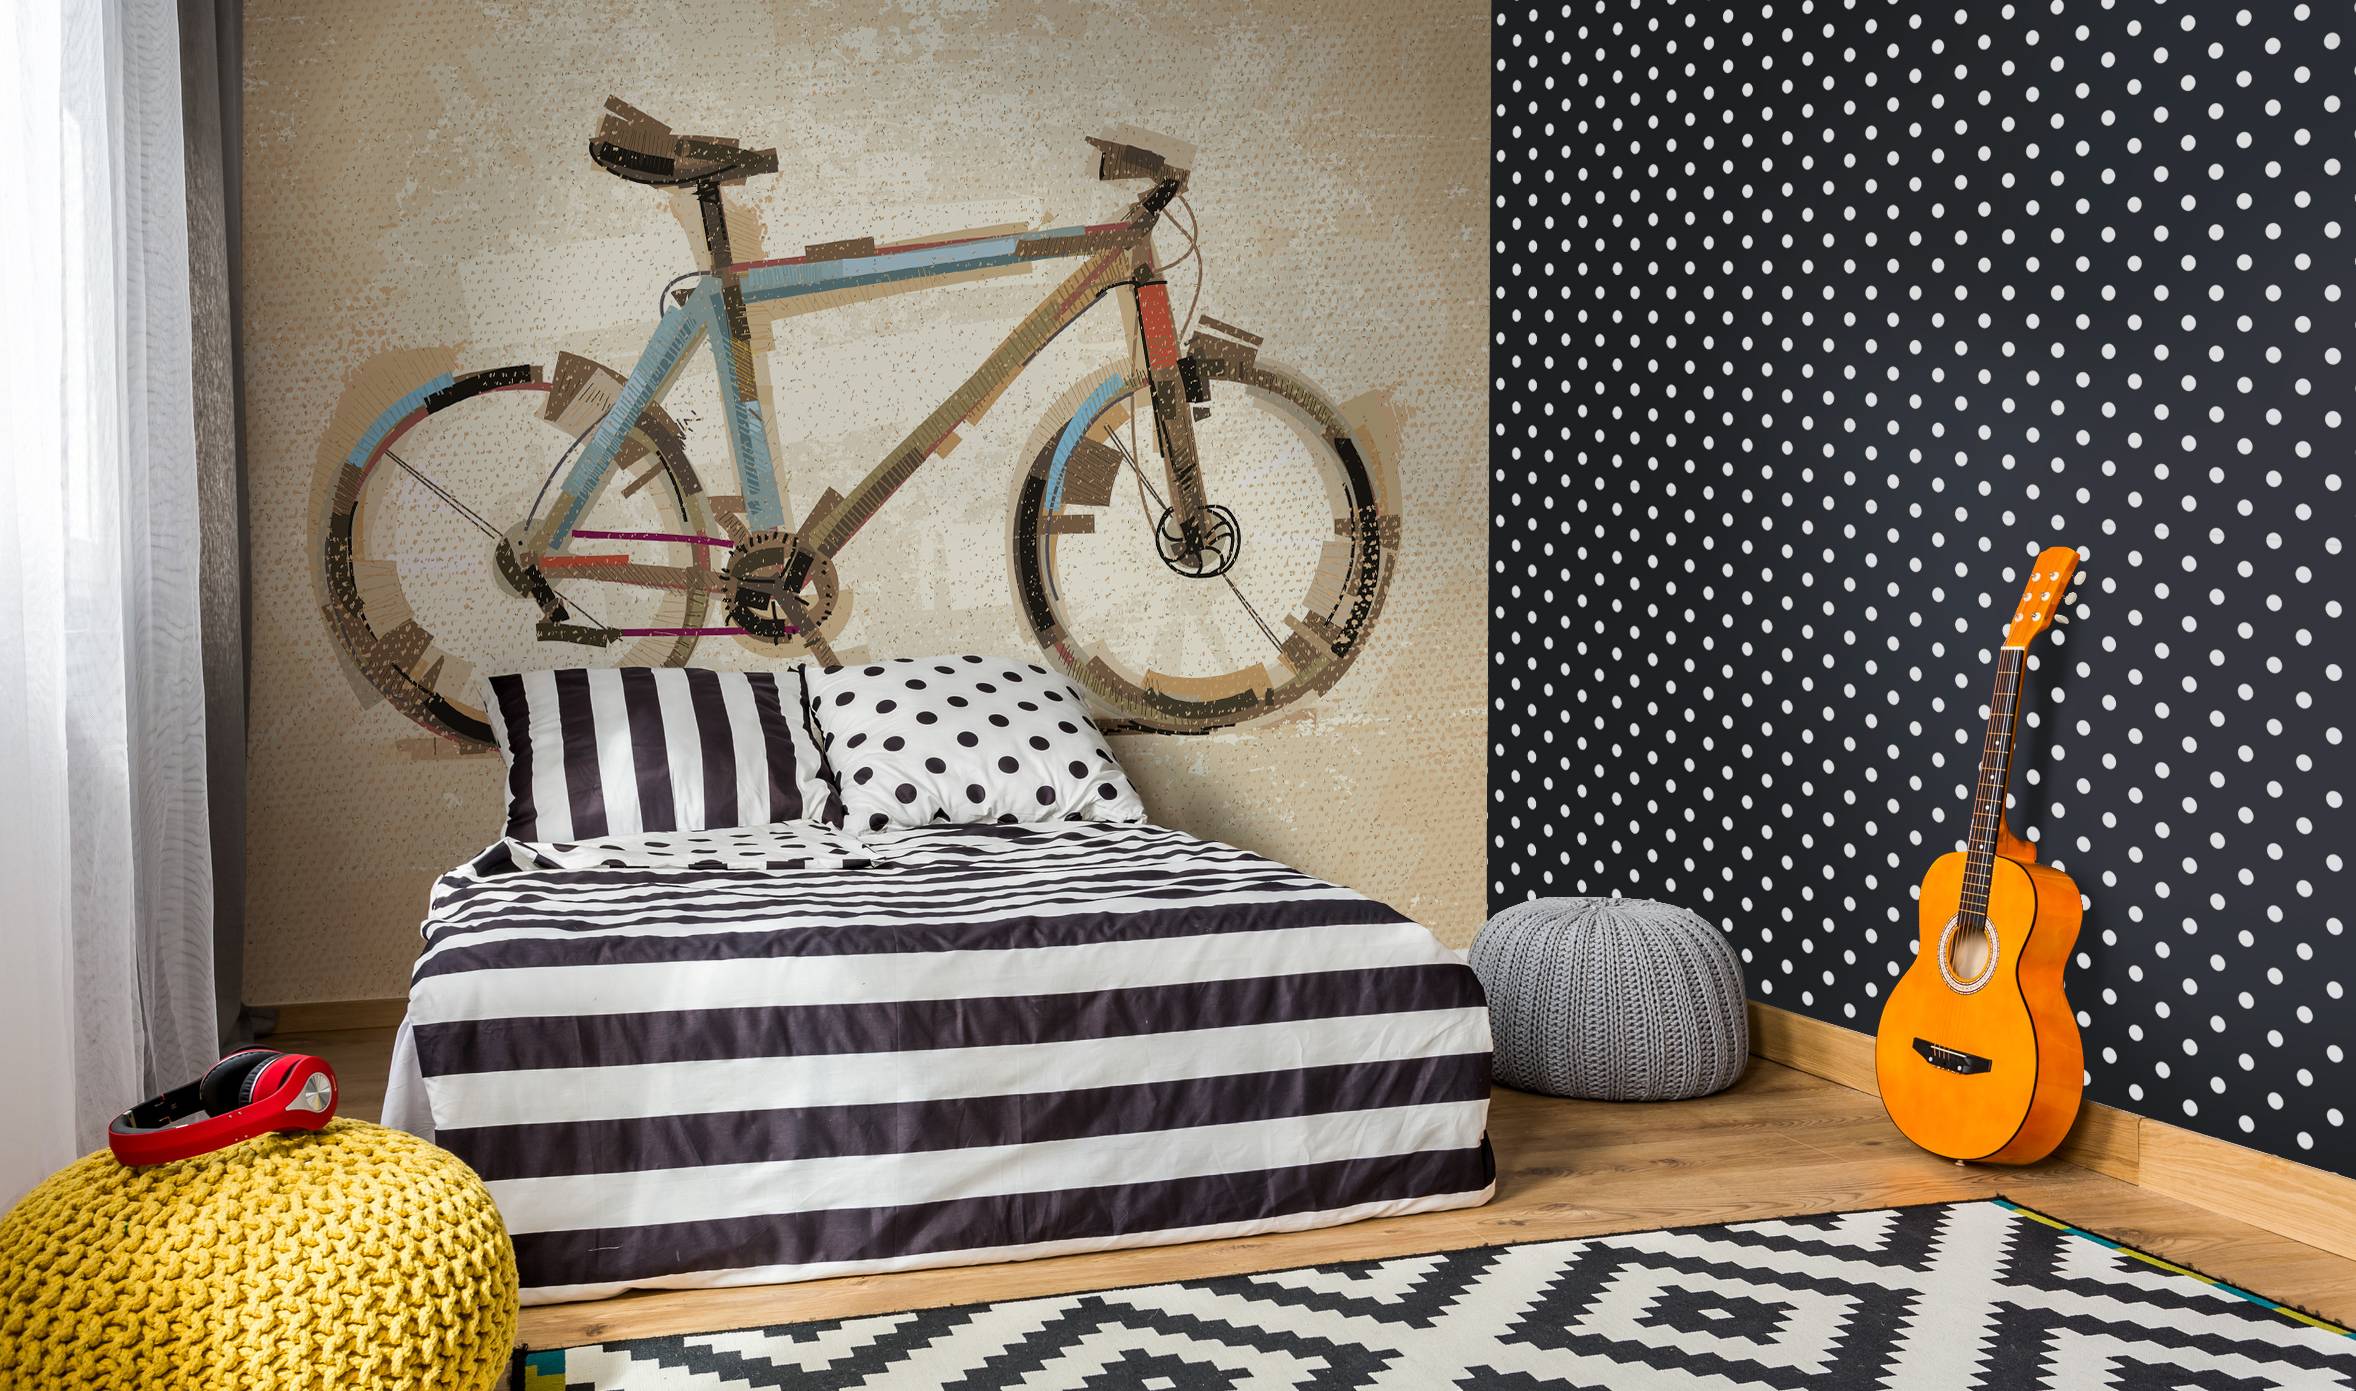 Cyclist bedroom • Bedroom - Abstraction - Teenager's room - Wall Murals